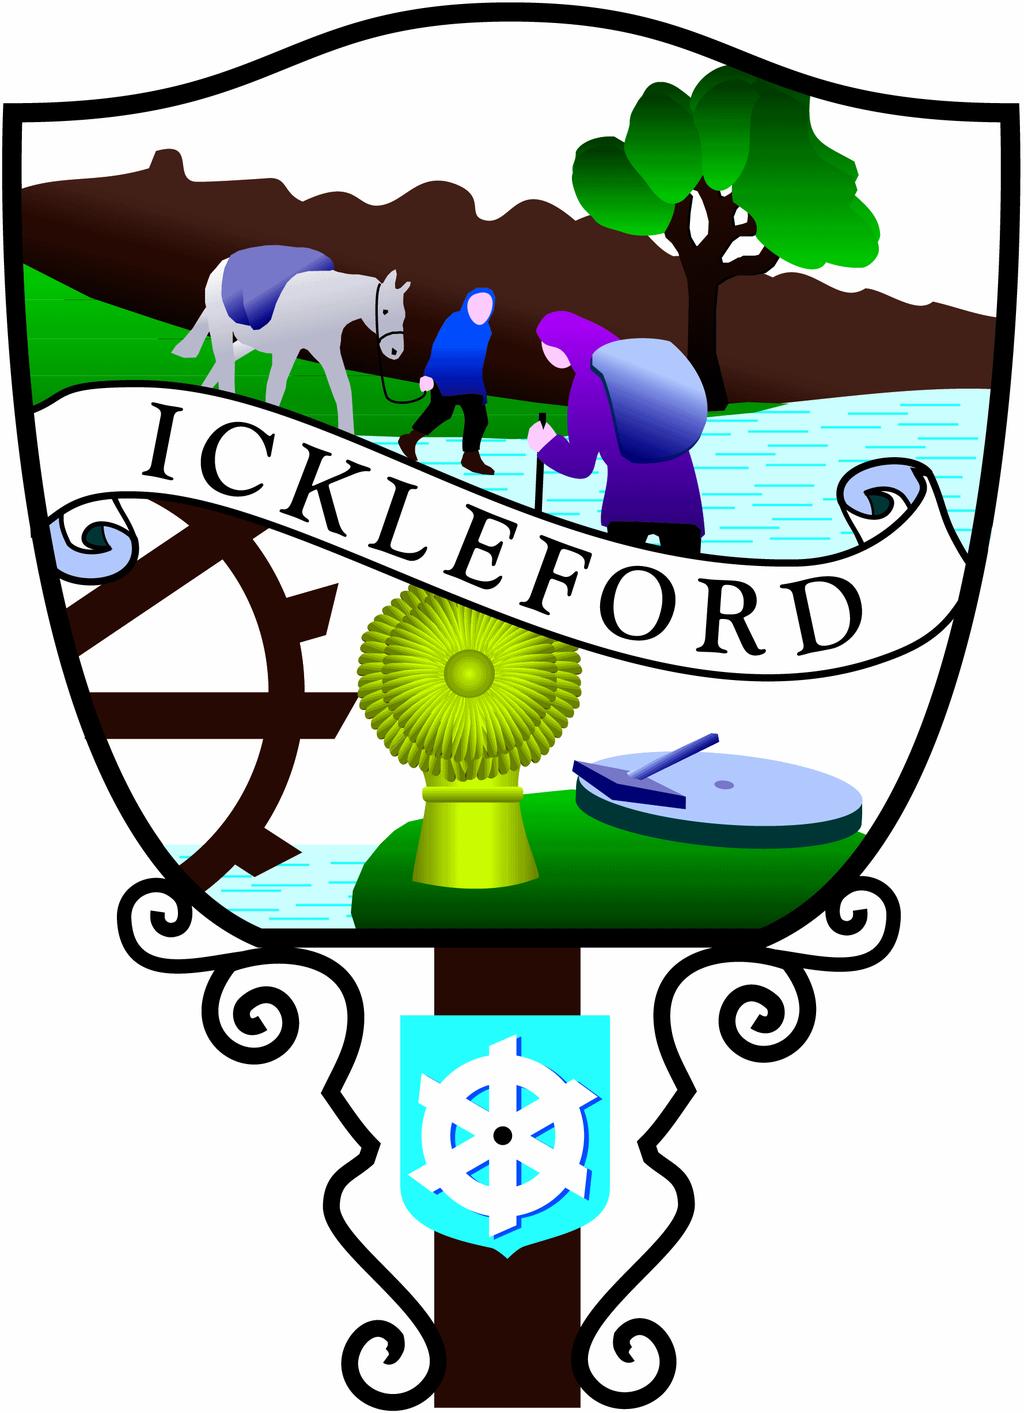 Ickleford